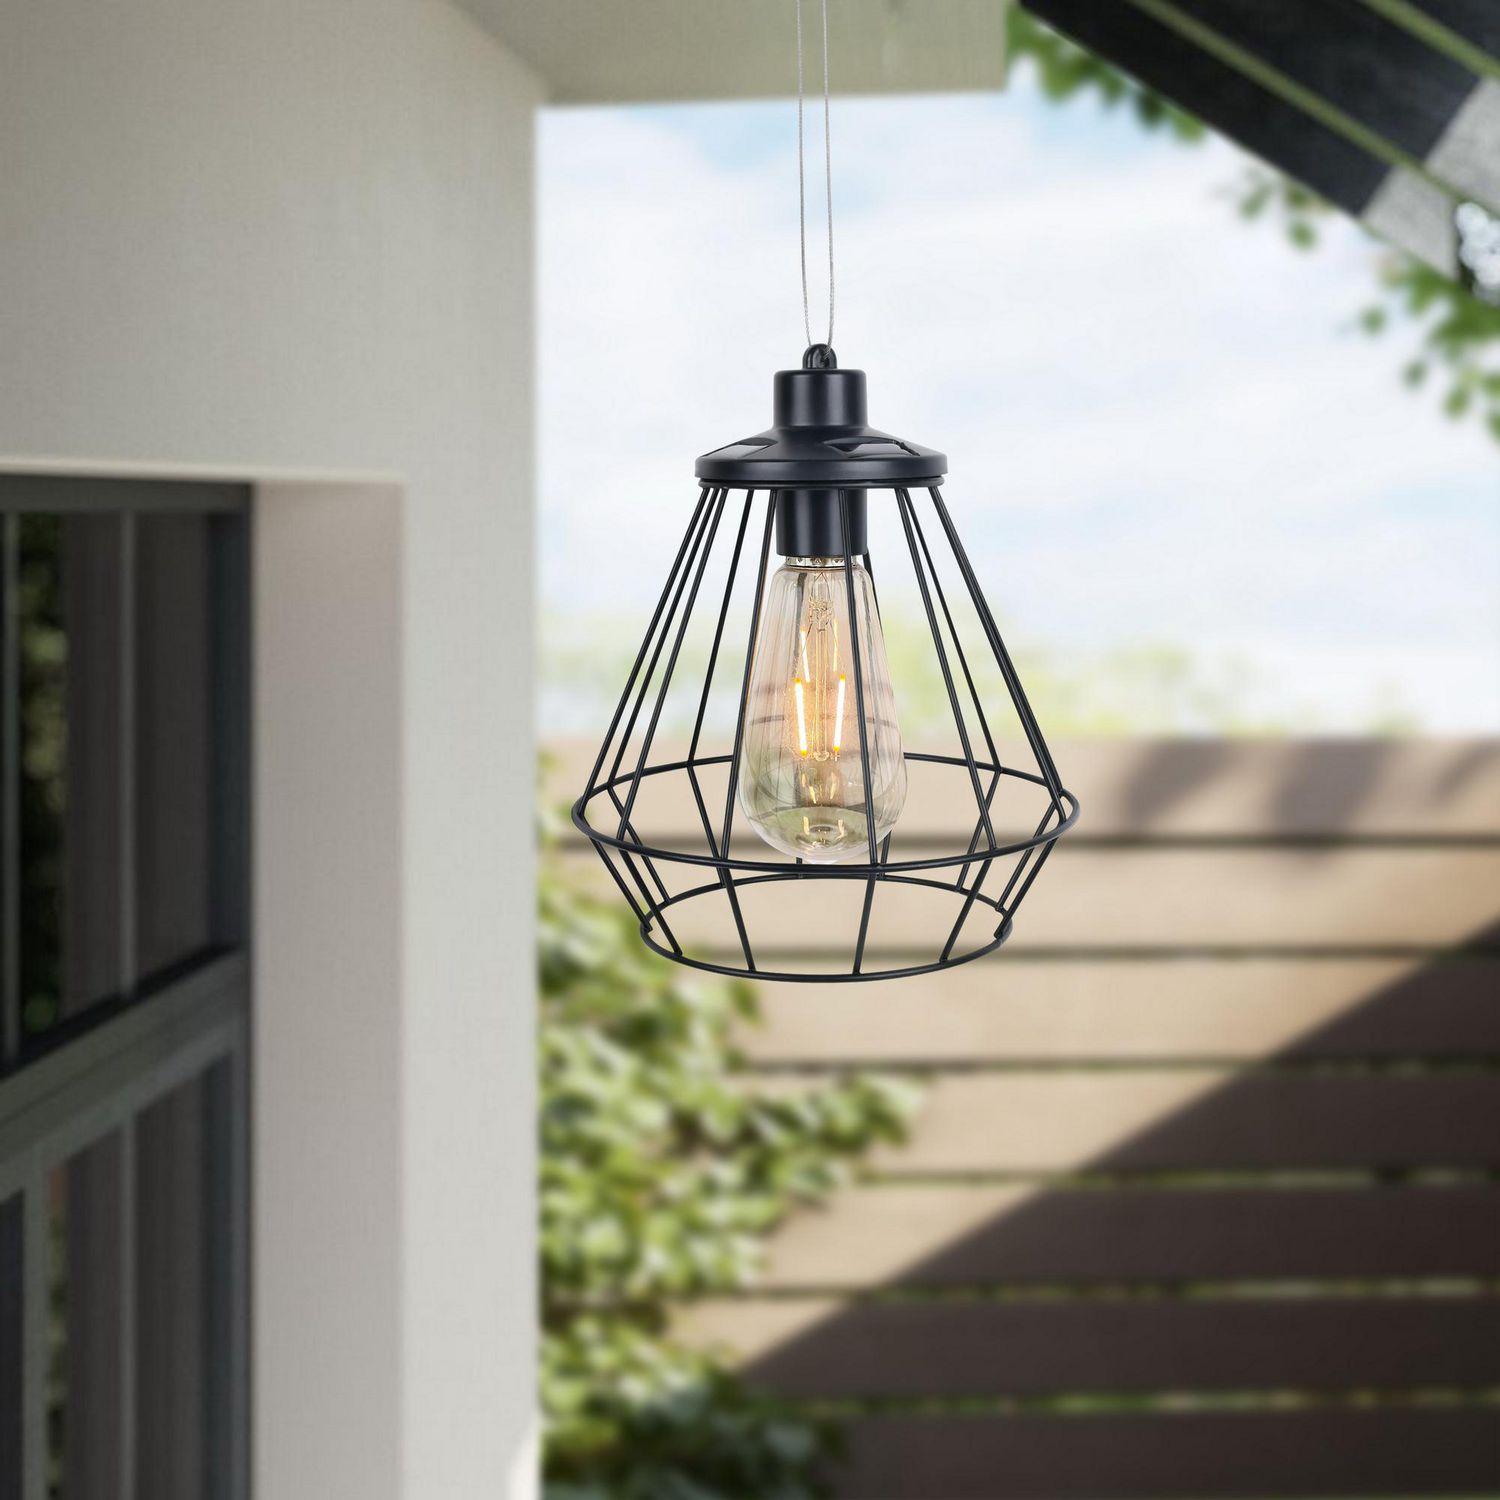 Hometrends Outdoor Solar Warm White LED Ceiling Pendent Light